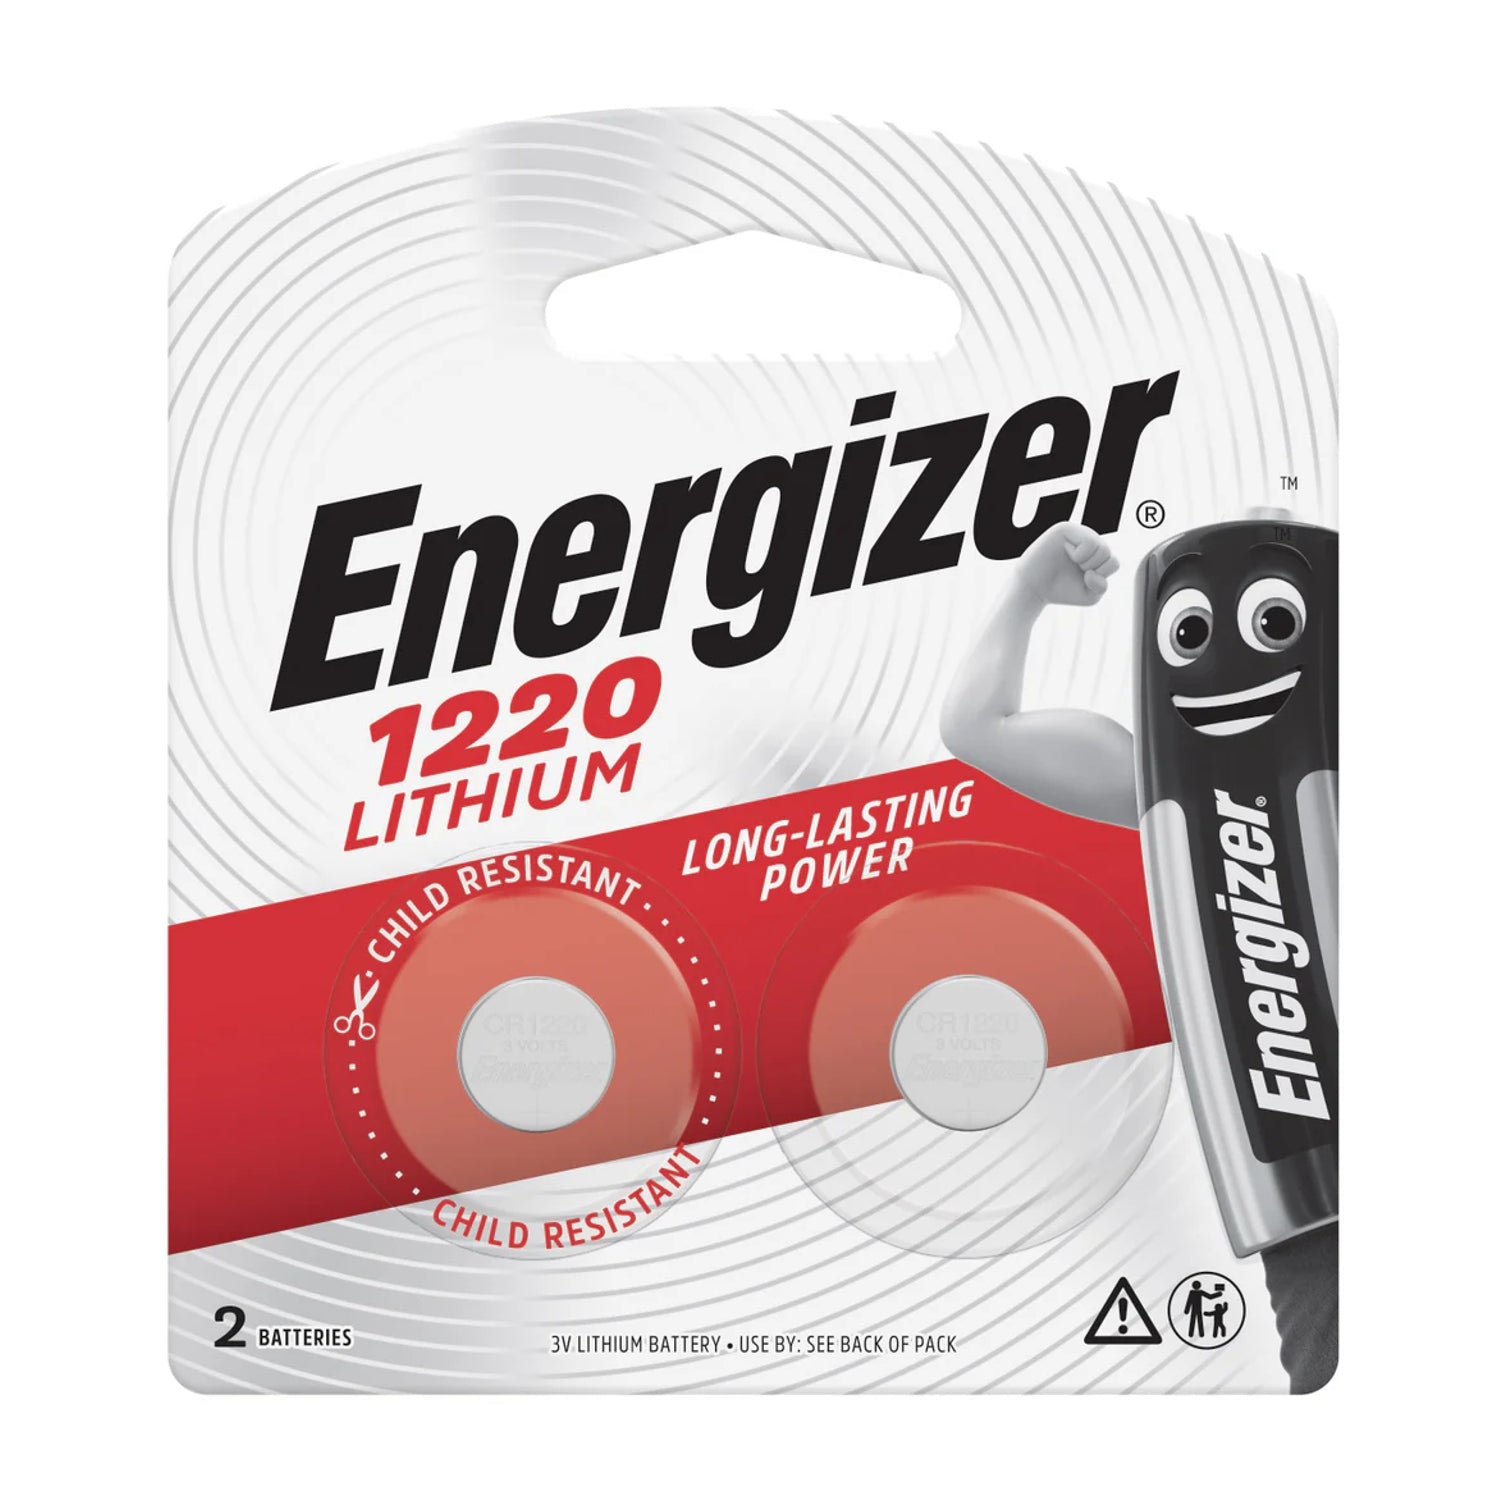 Energizer 1220 3v lithium coin battery 2 pack  (moq 12)